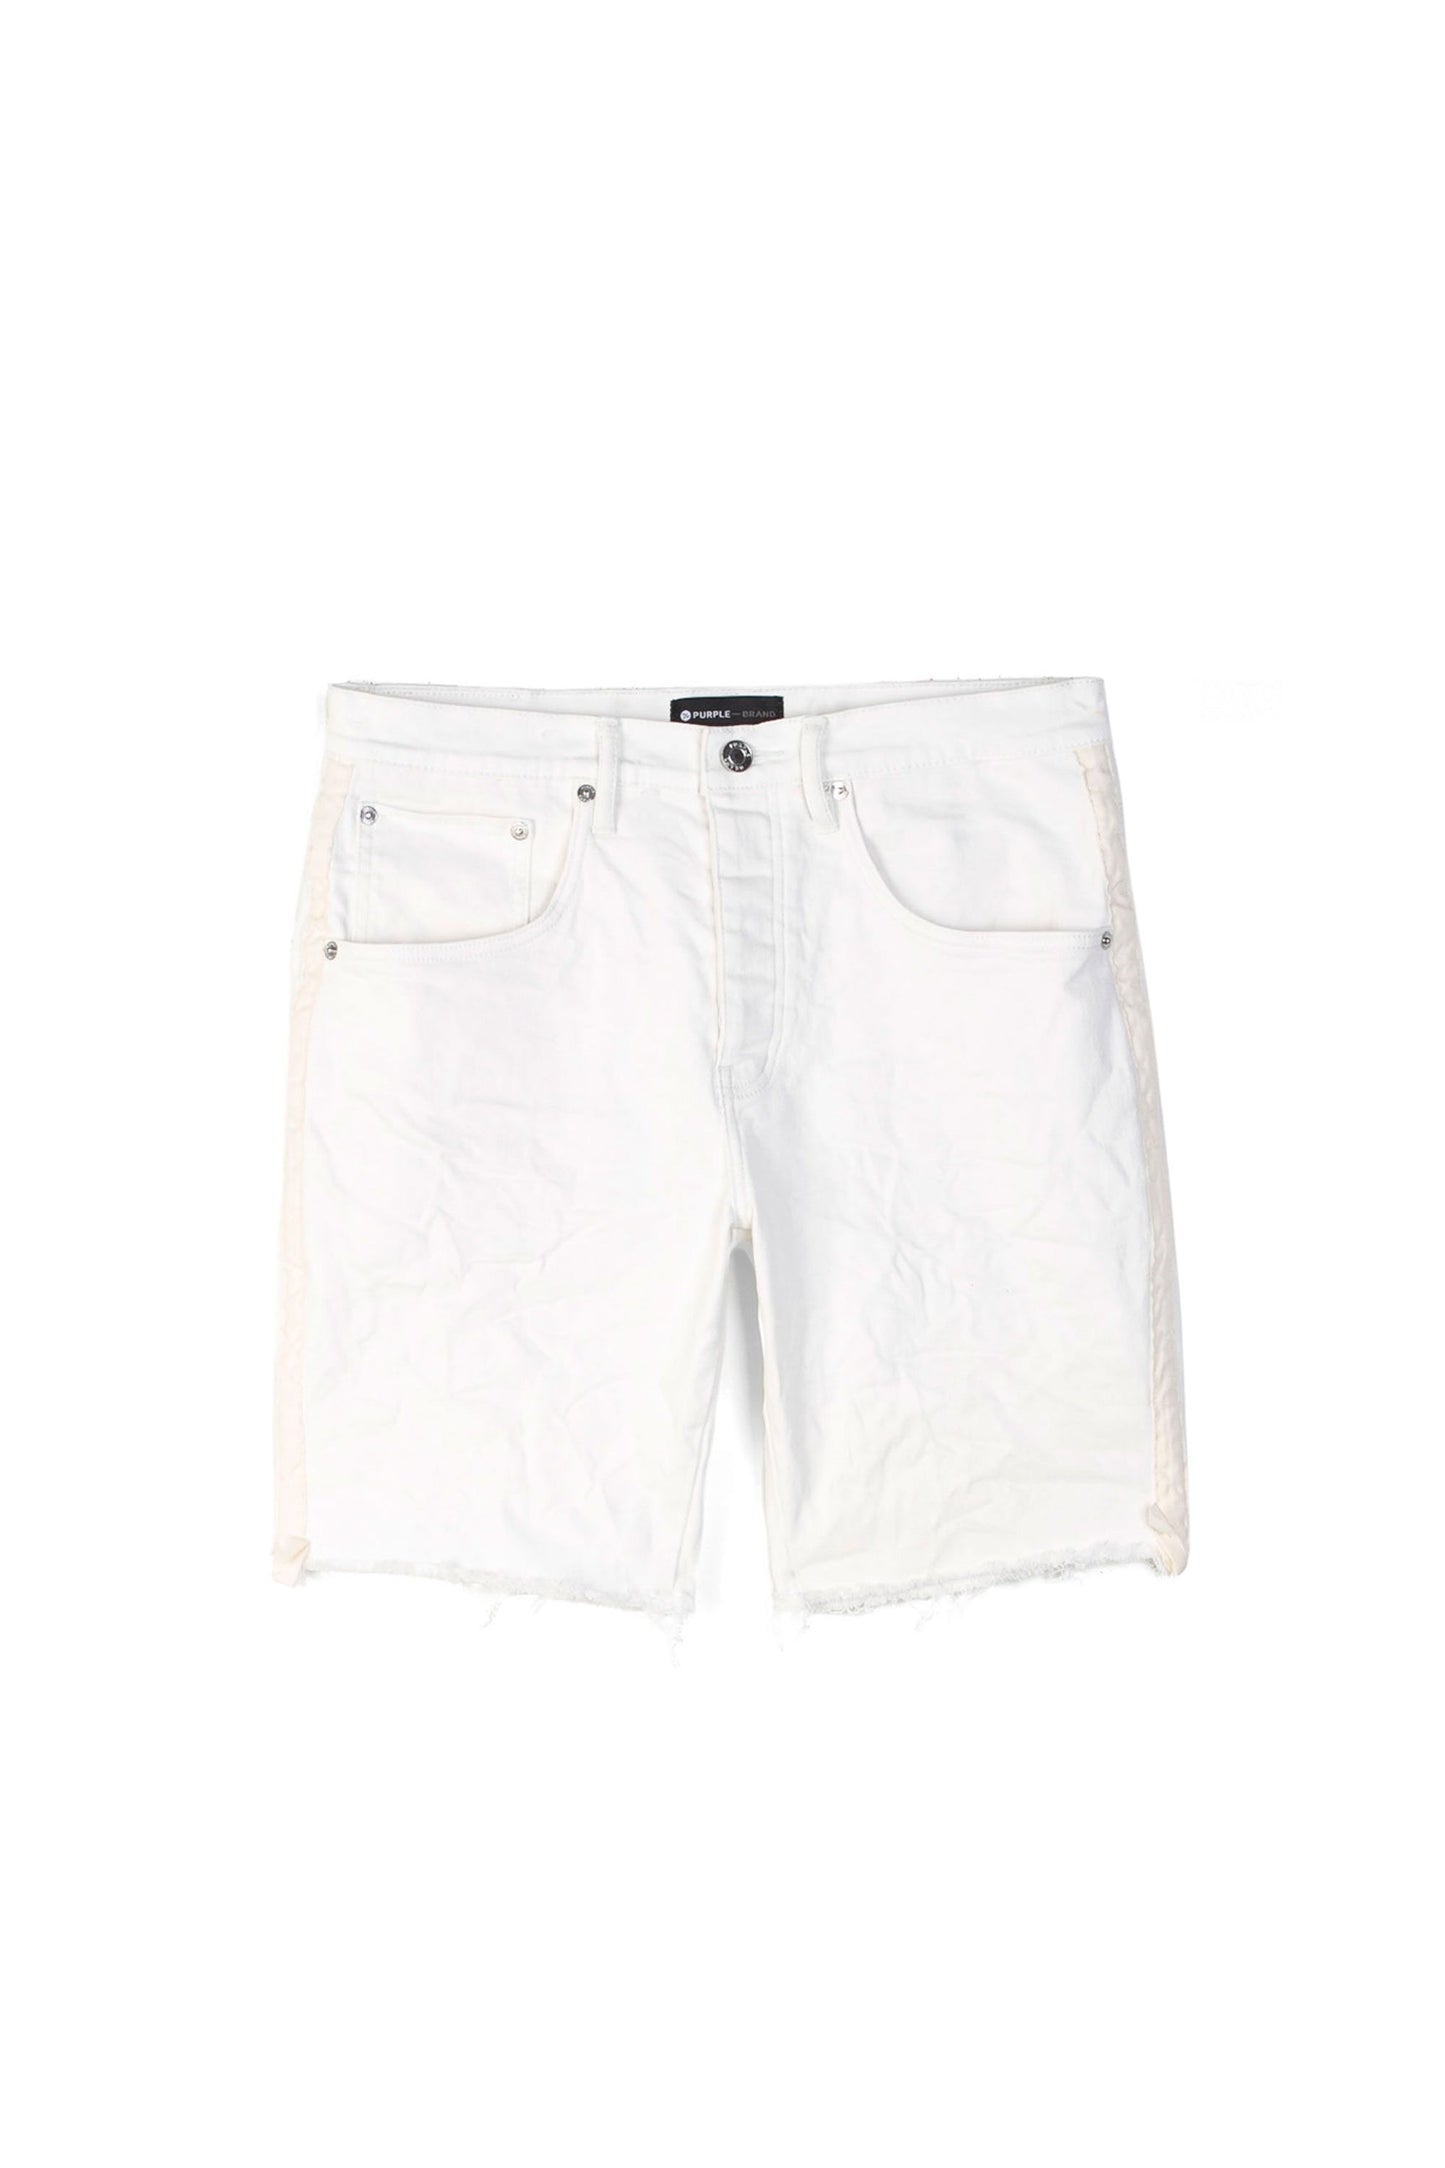 PURPLE BRAND - Men's Denim Jean Short - Mid Rise Short - Style No. P020 - Grosgrain Tuxedo Stripe White - Front